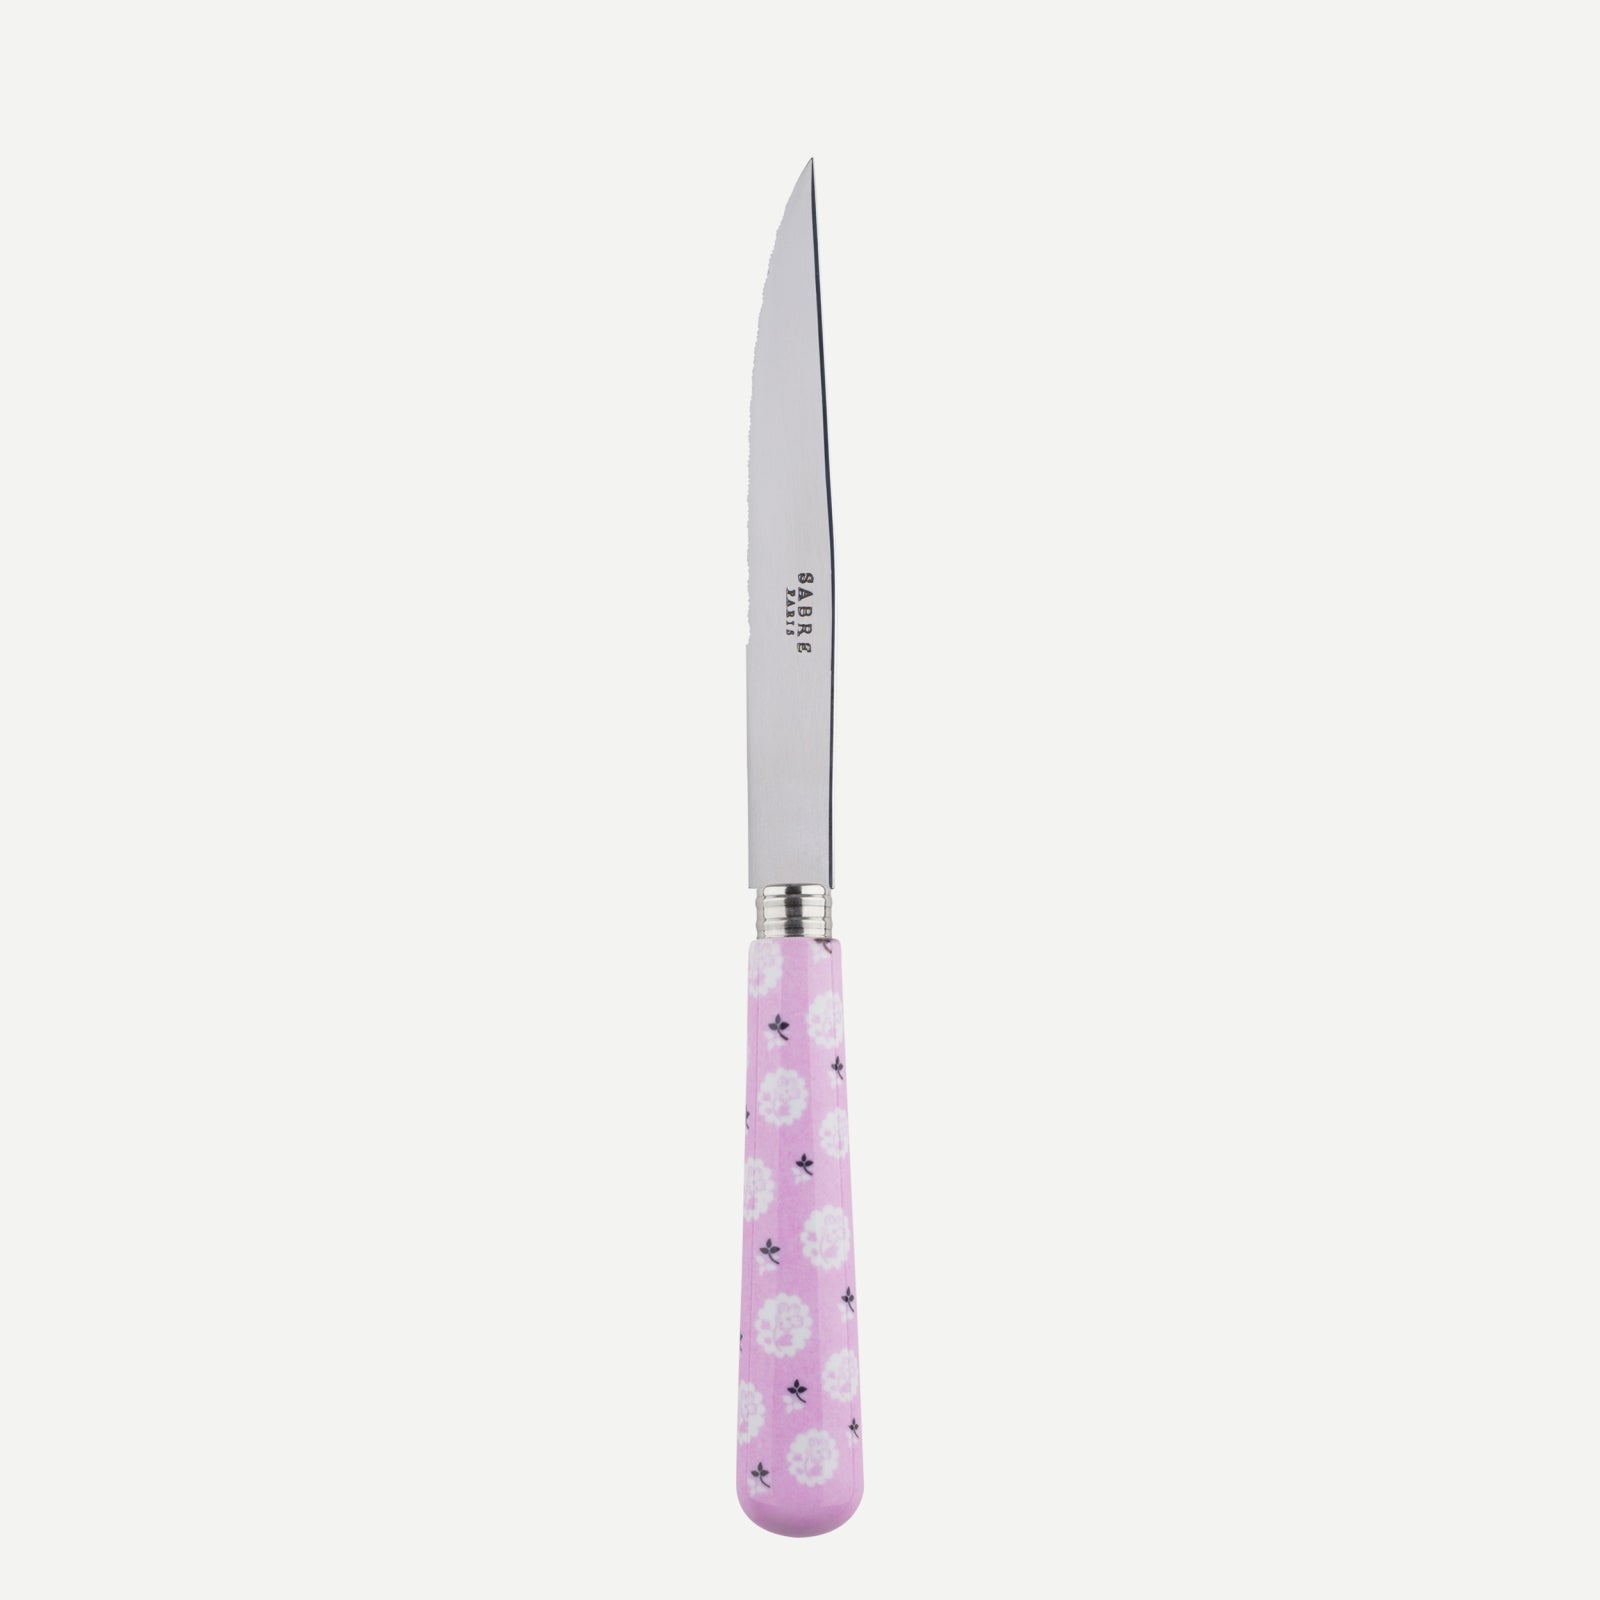 Steack knife - Provencal - Pink